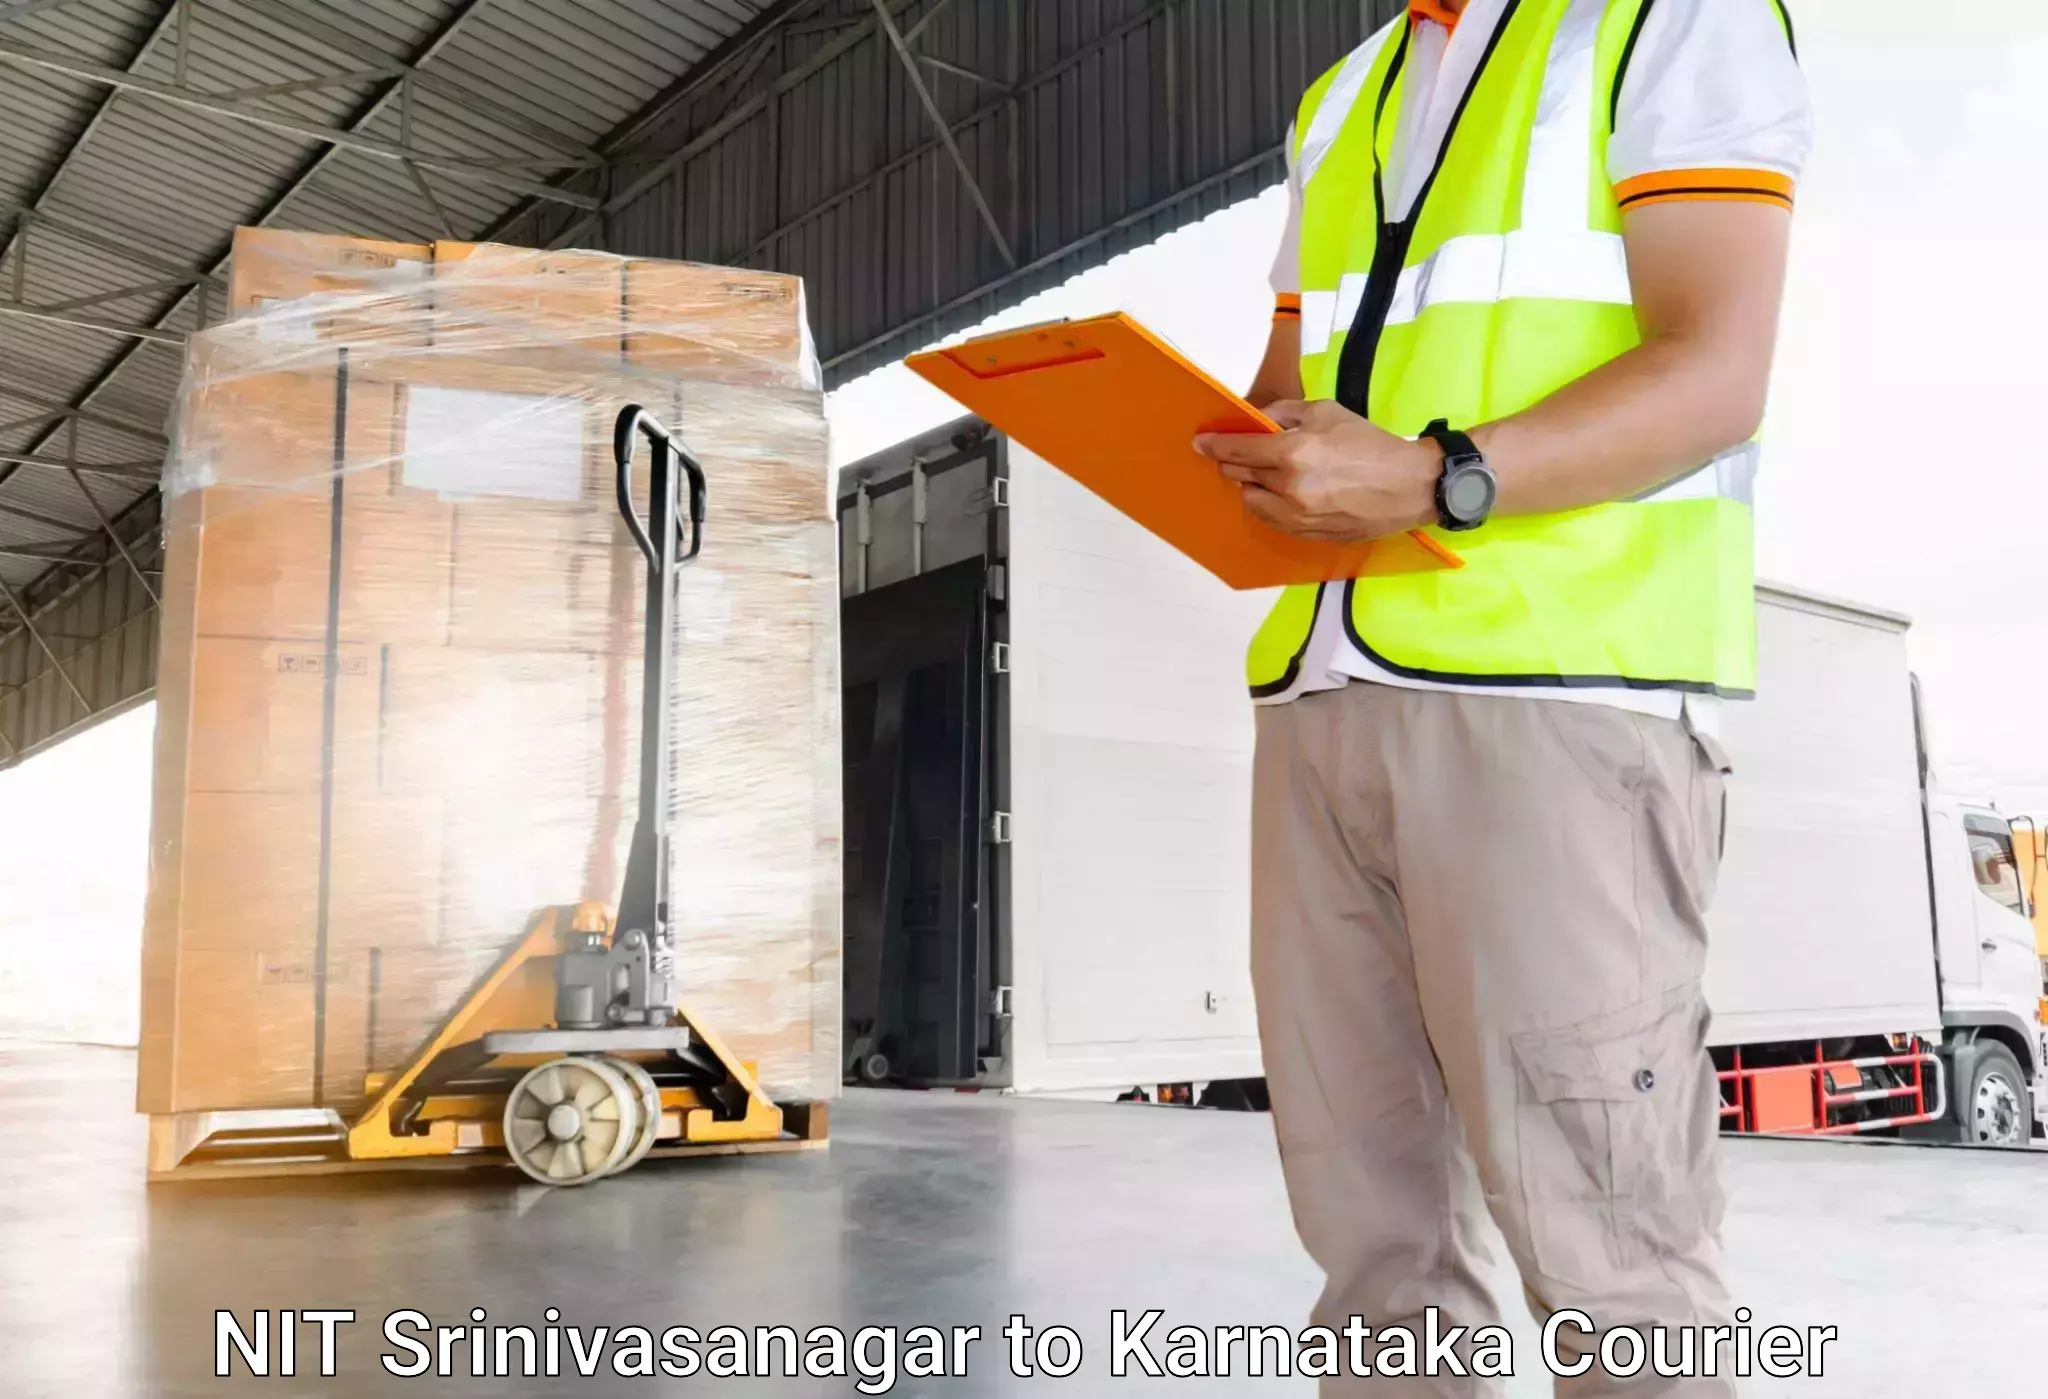 Luggage delivery app NIT Srinivasanagar to Deodurga